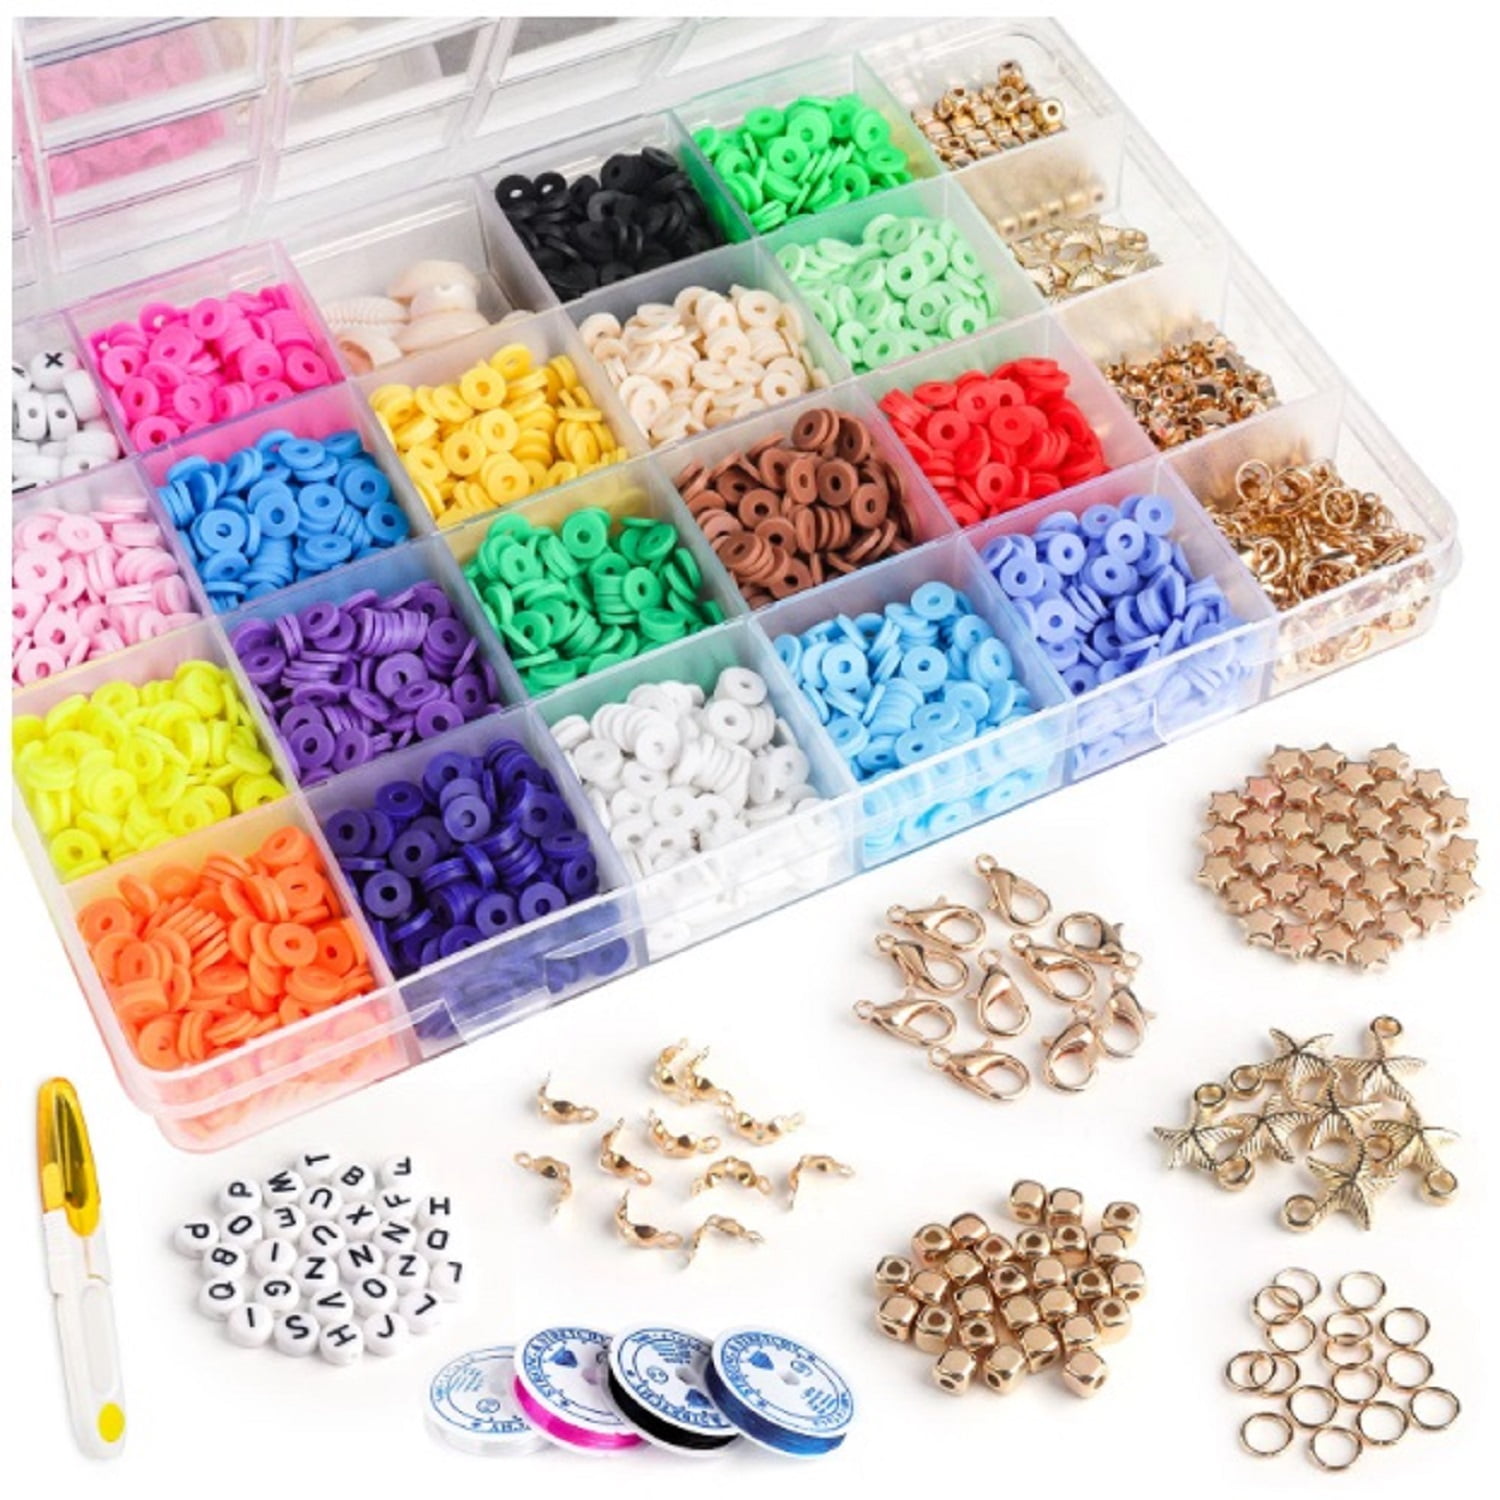 mozhixue Charm Bracelet Making Kit String Kids DIY Friendship Crystal Beads  Pendant Bracelets Jewelry Making Kit for Girls 5-7,Yellow